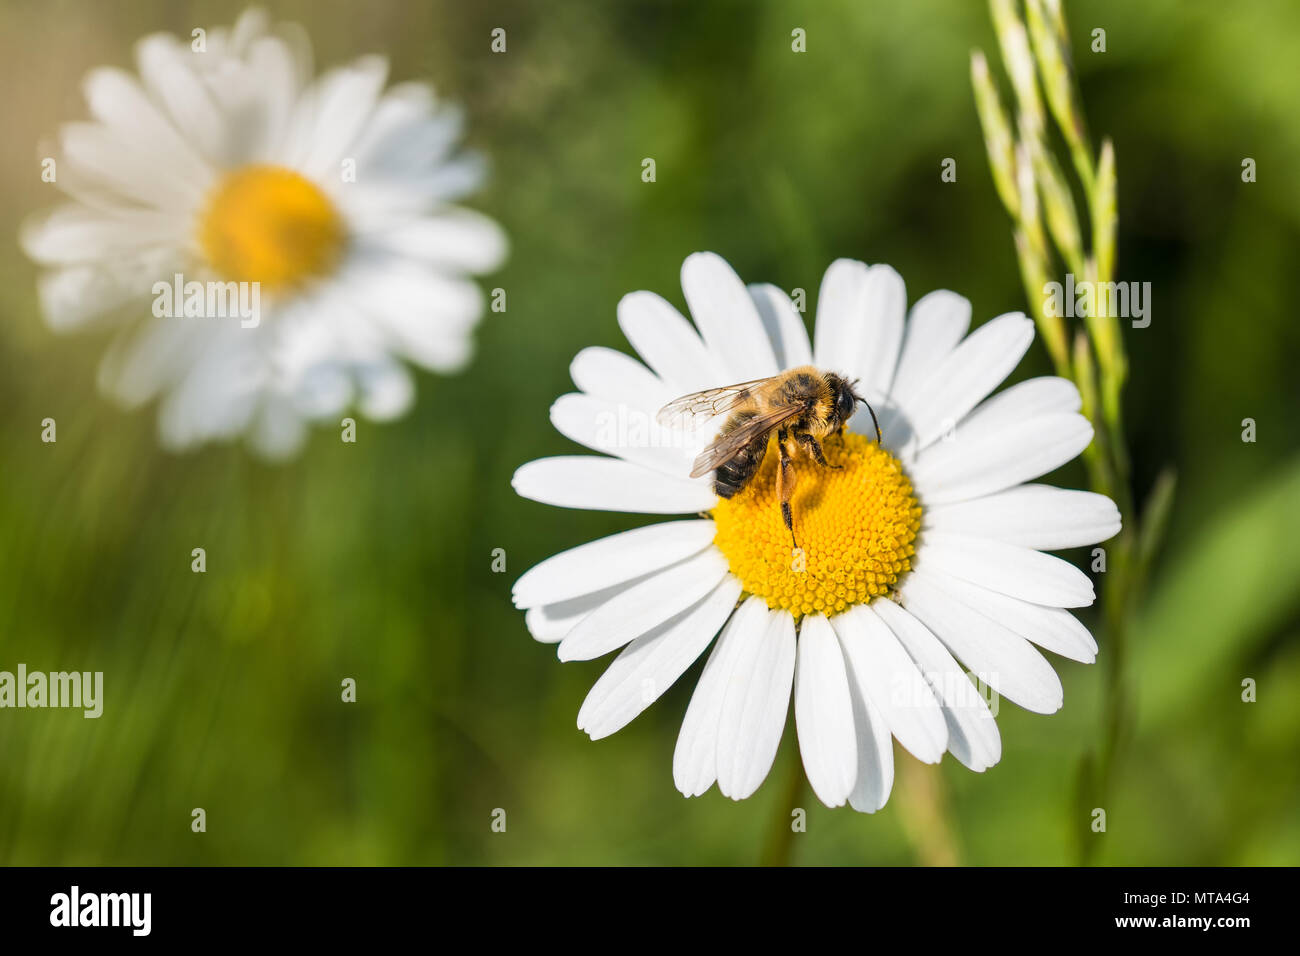 White marguerite. European honey bee. Leucanthemum vulgare. Apis mellifera. Beautiful honeybee close-up. Pollination. Sunlit ox-eye daisy. Green grass. Stock Photo